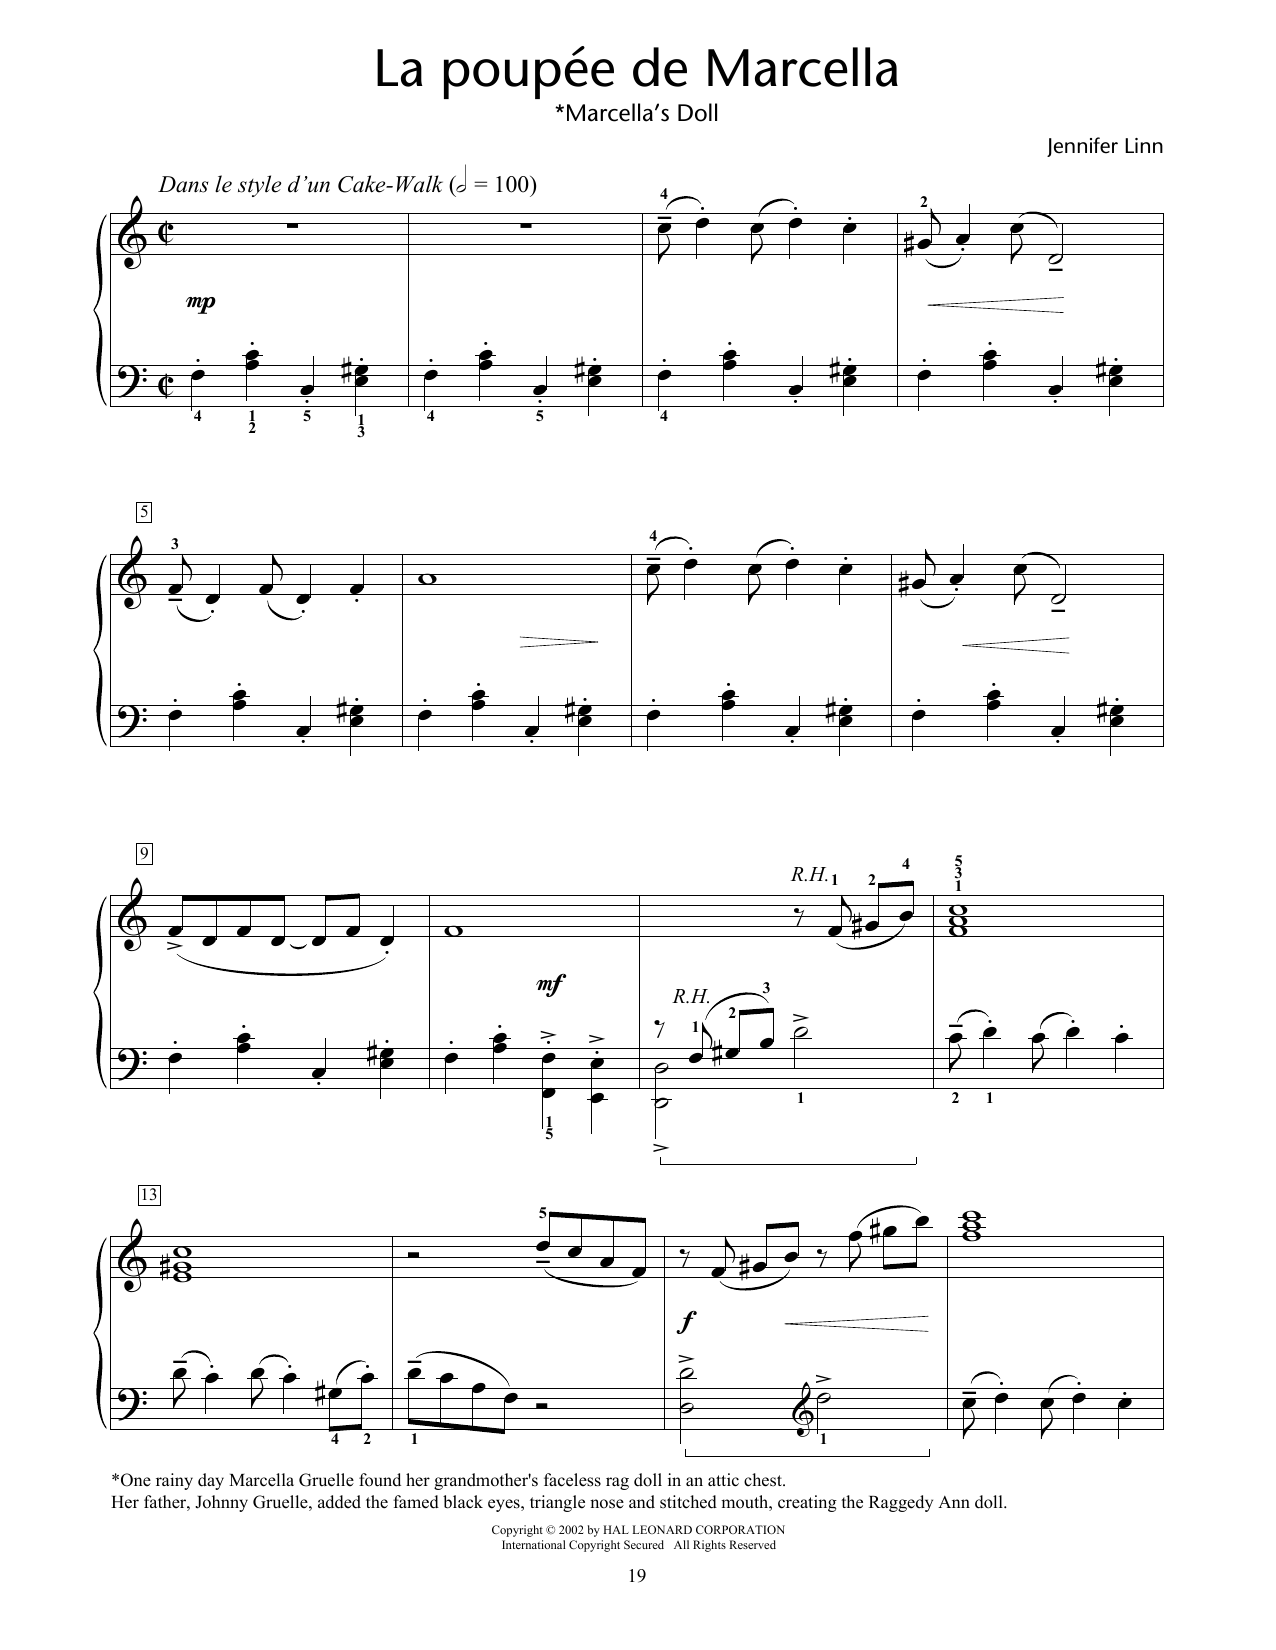 Download Jennifer Linn La Poupee De Marcella (Marcella's Doll) Sheet Music and learn how to play Easy Piano PDF digital score in minutes